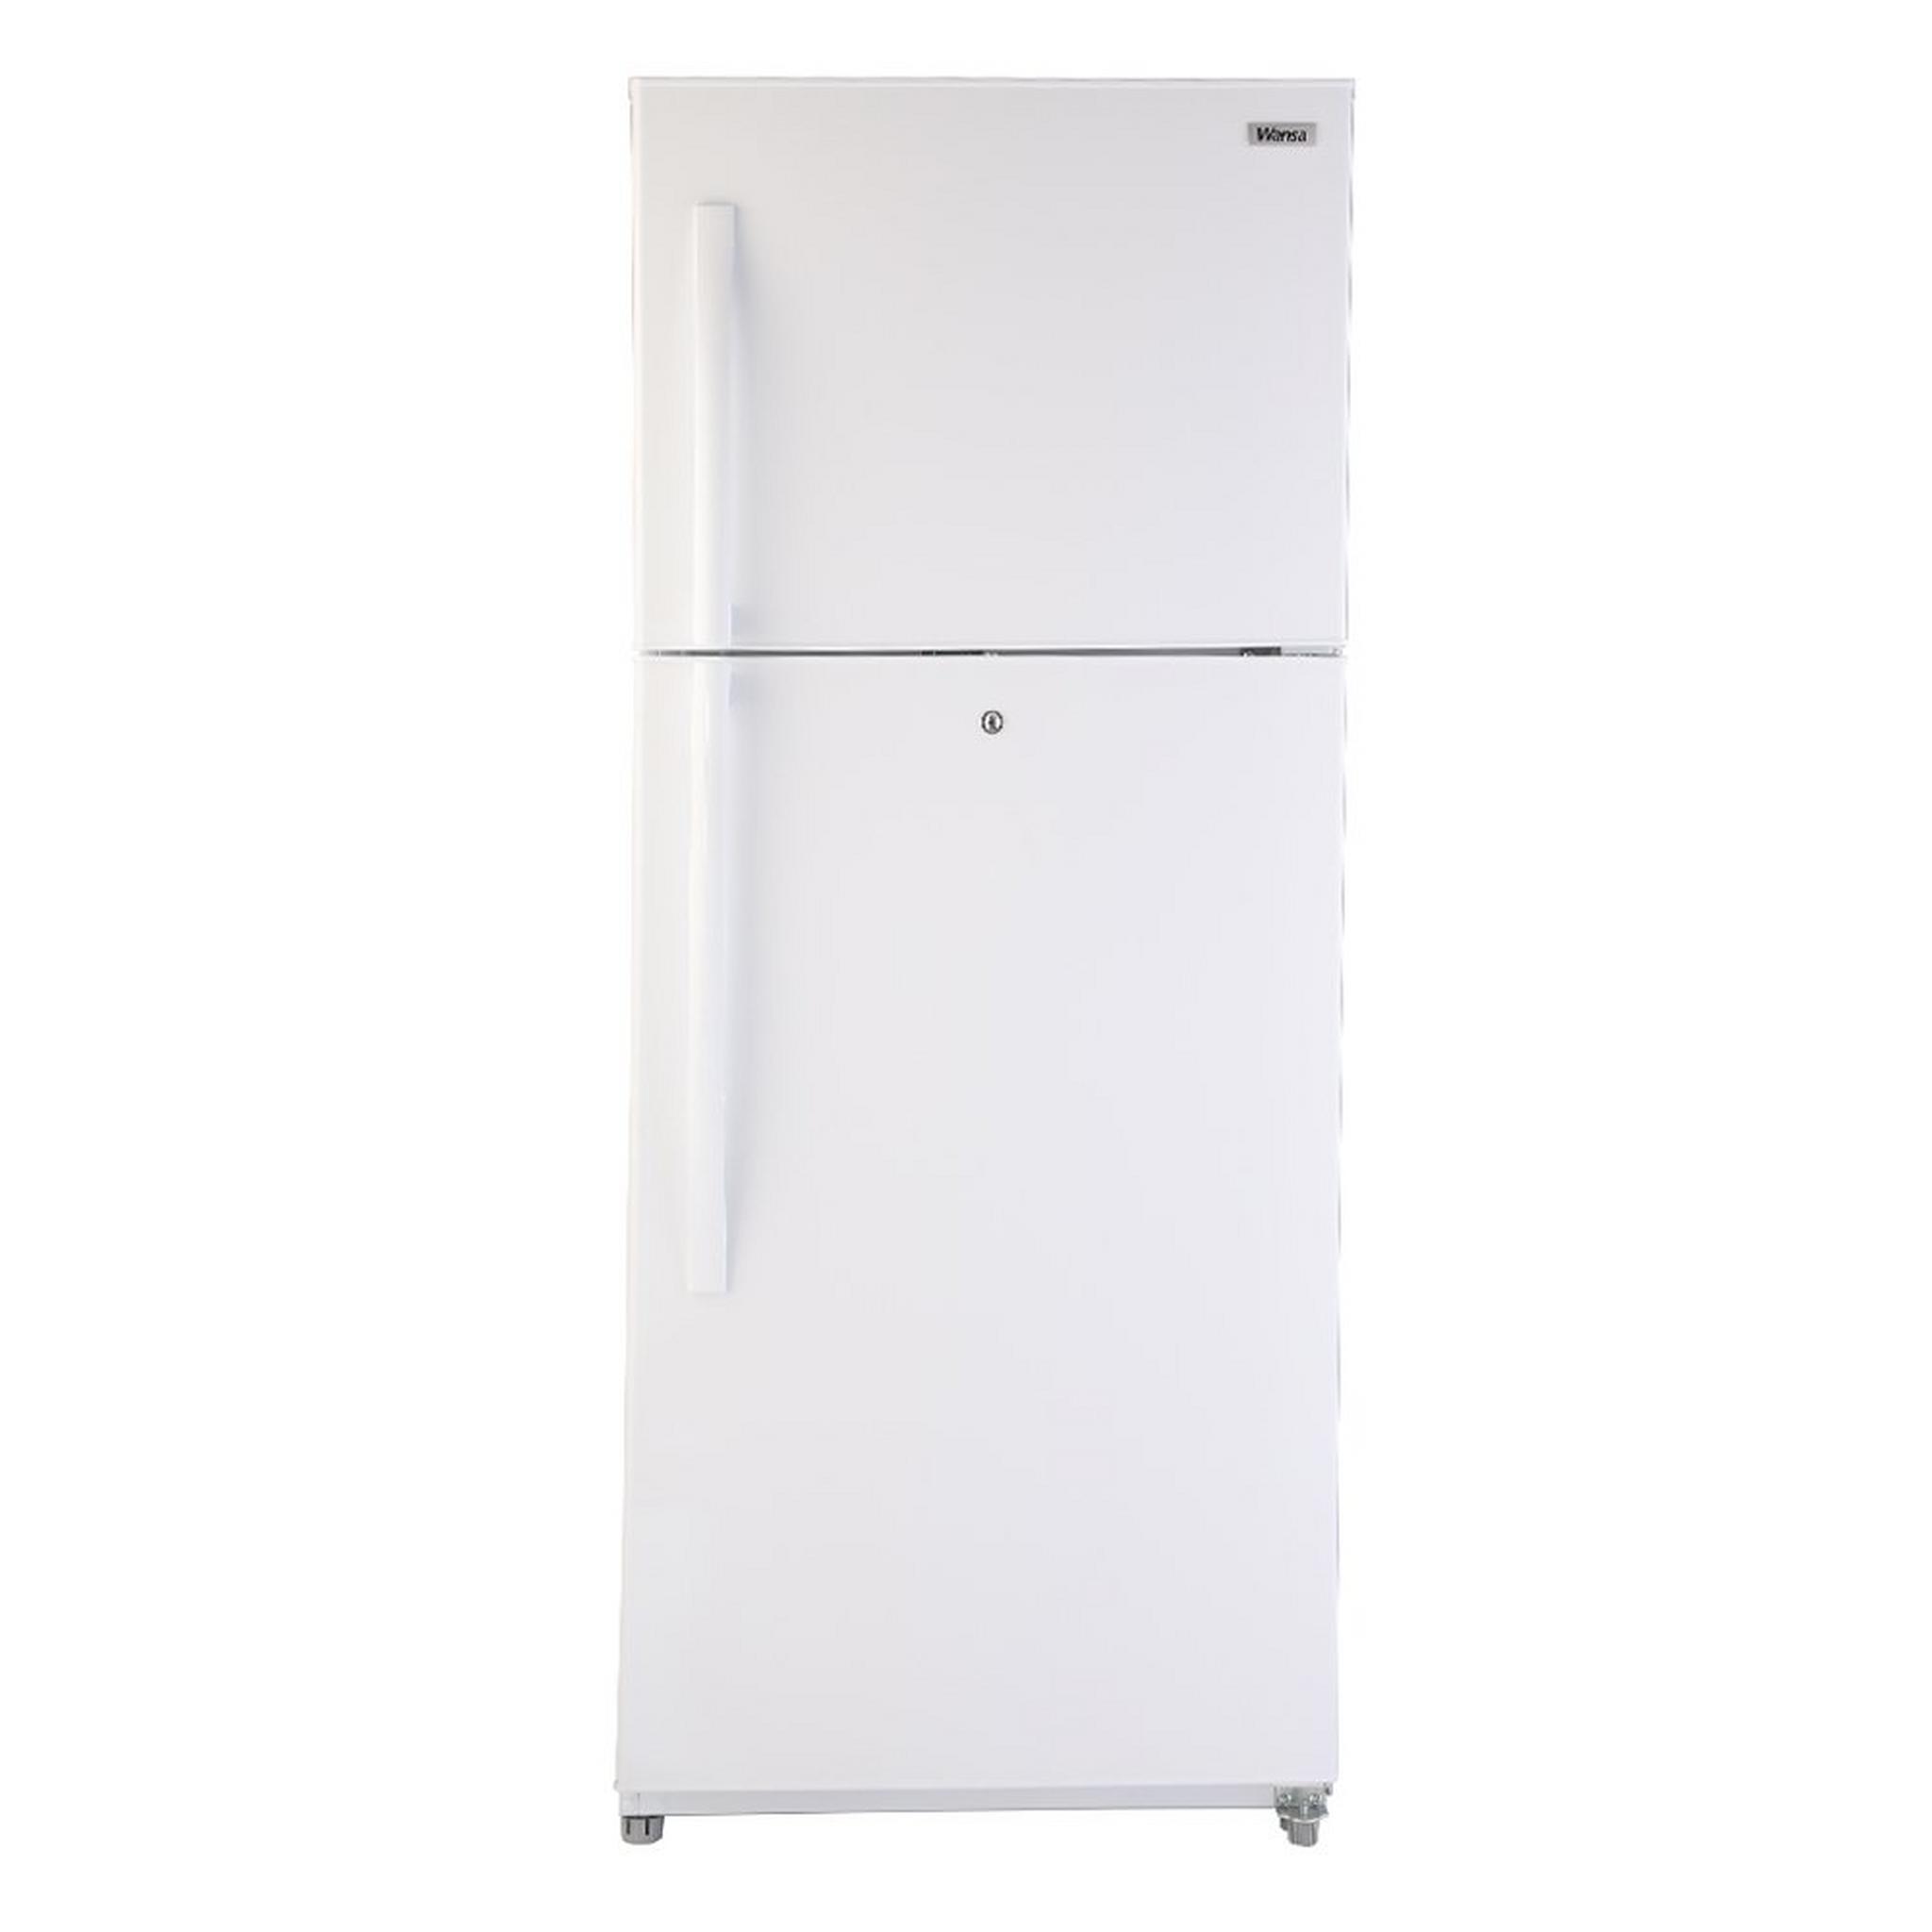 Wansa 18CFT Top Mount Refrigerator (WRTW-520-NFWTC622) - White